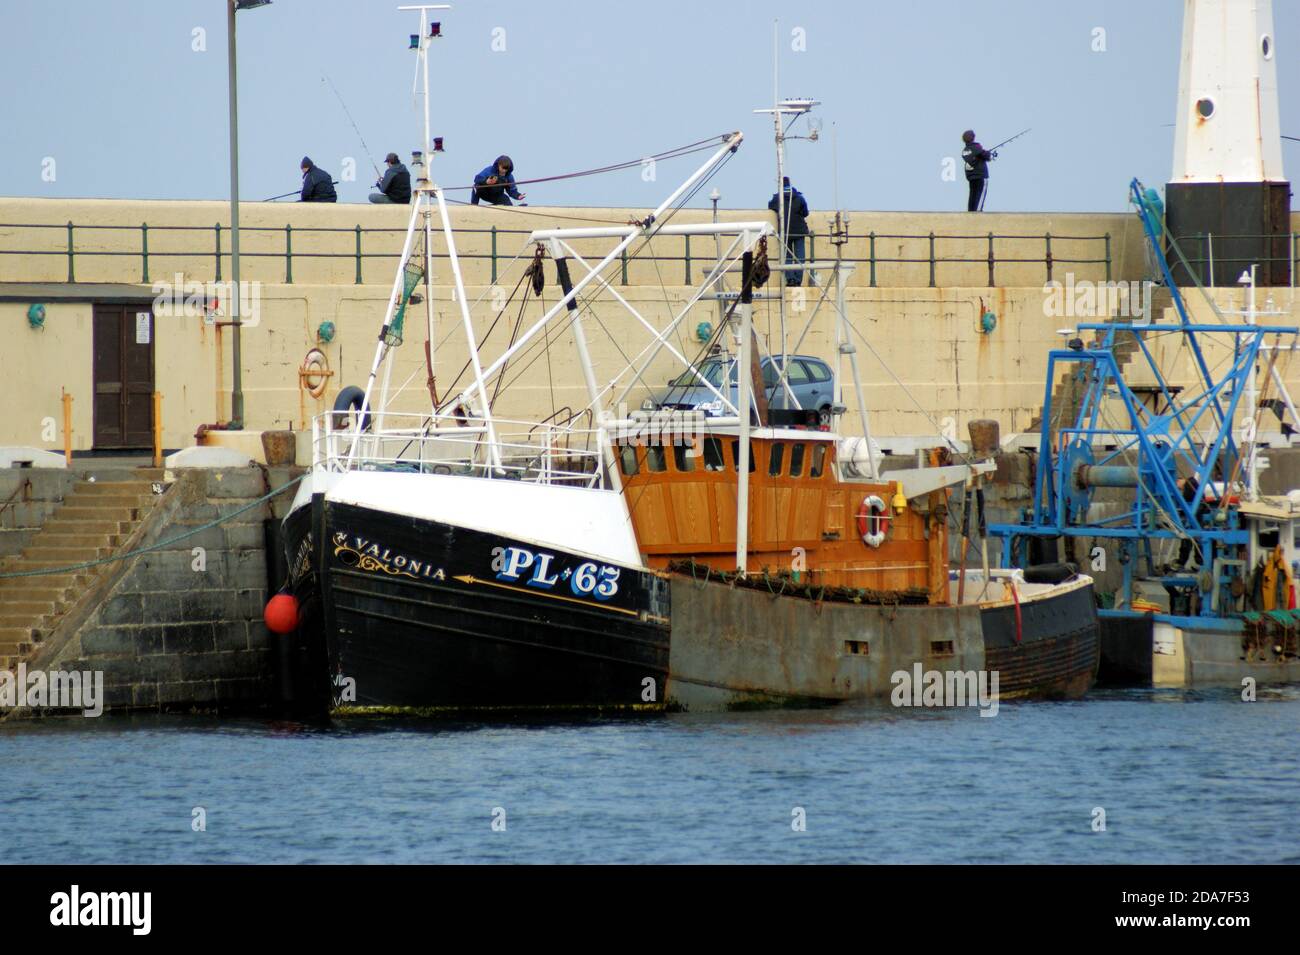 Fishing vessel Valonia at Peel Isle of Man Stock Photo